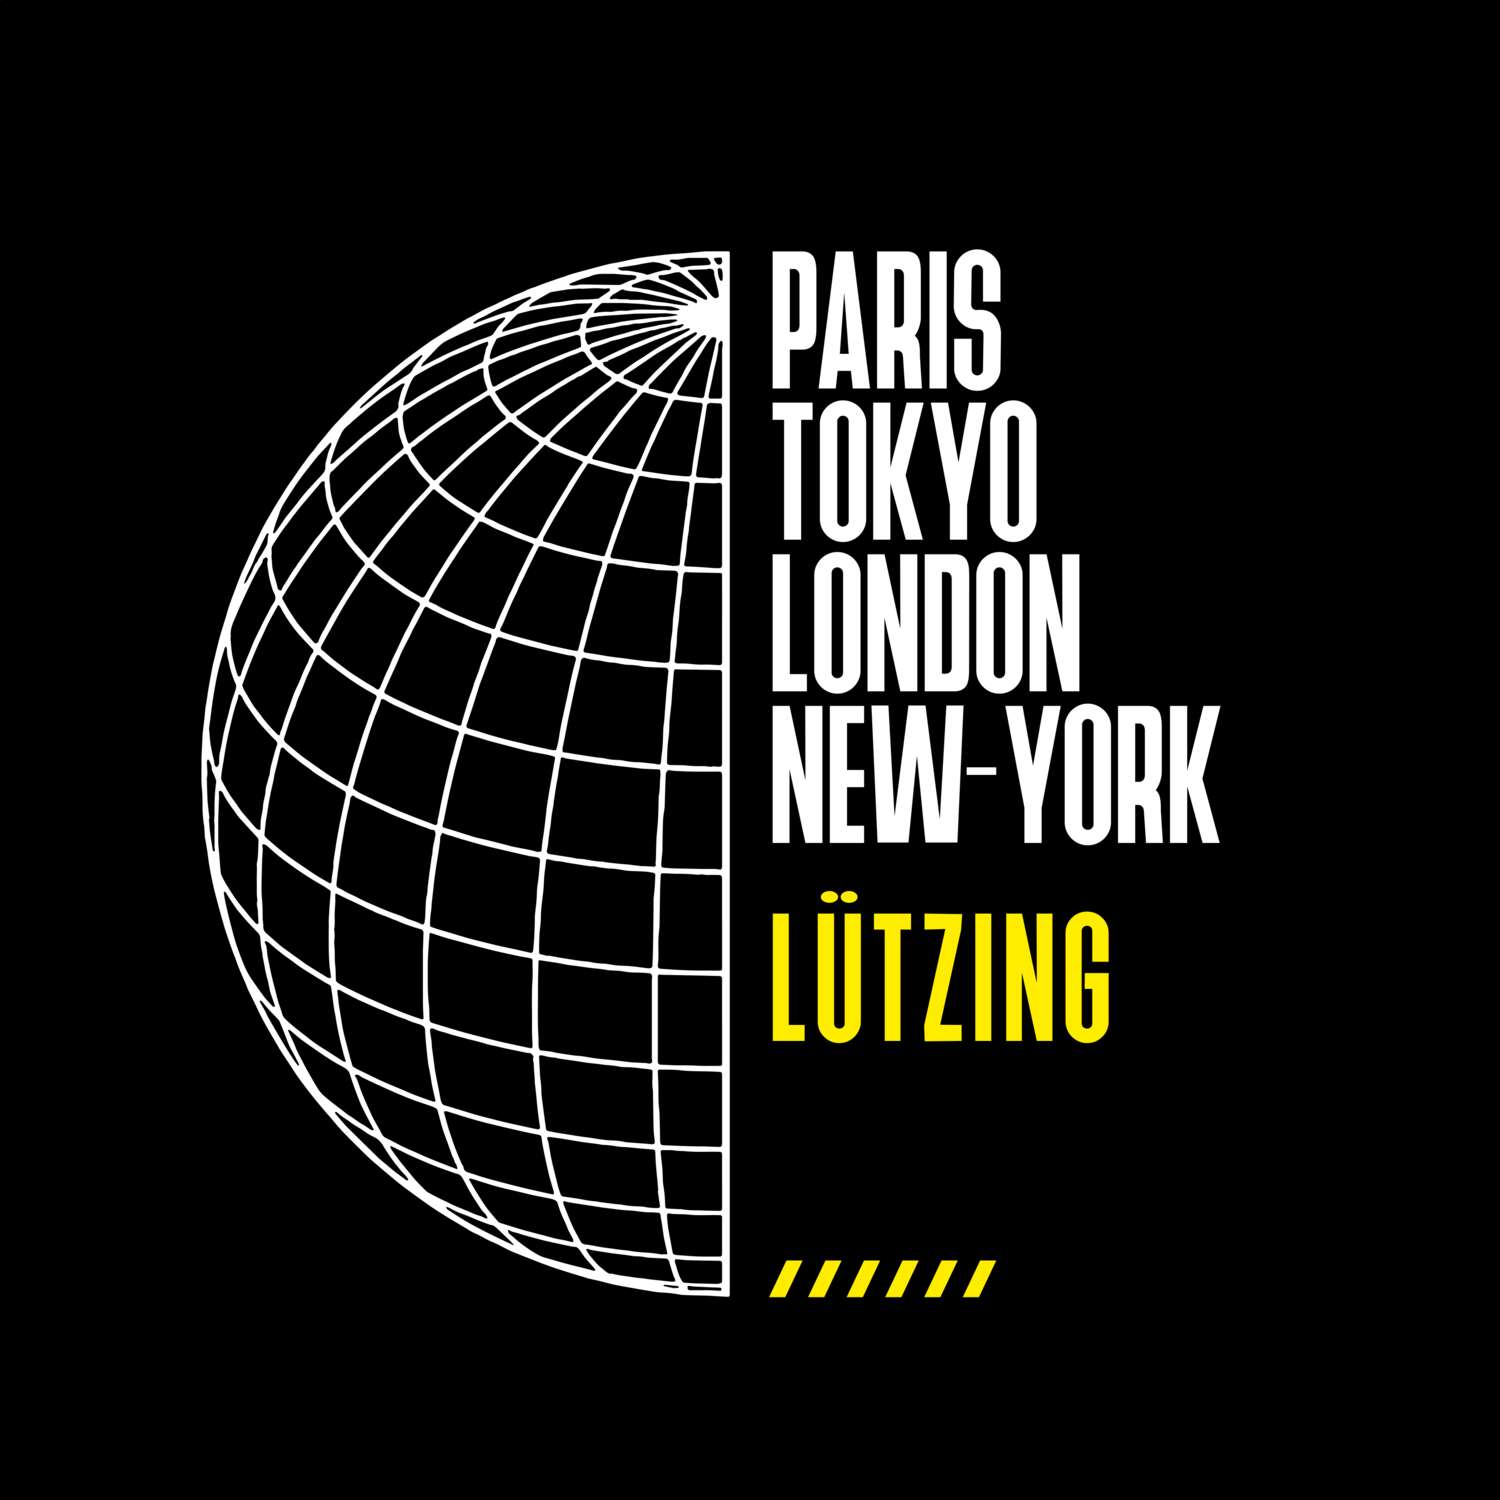 Lützing T-Shirt »Paris Tokyo London«